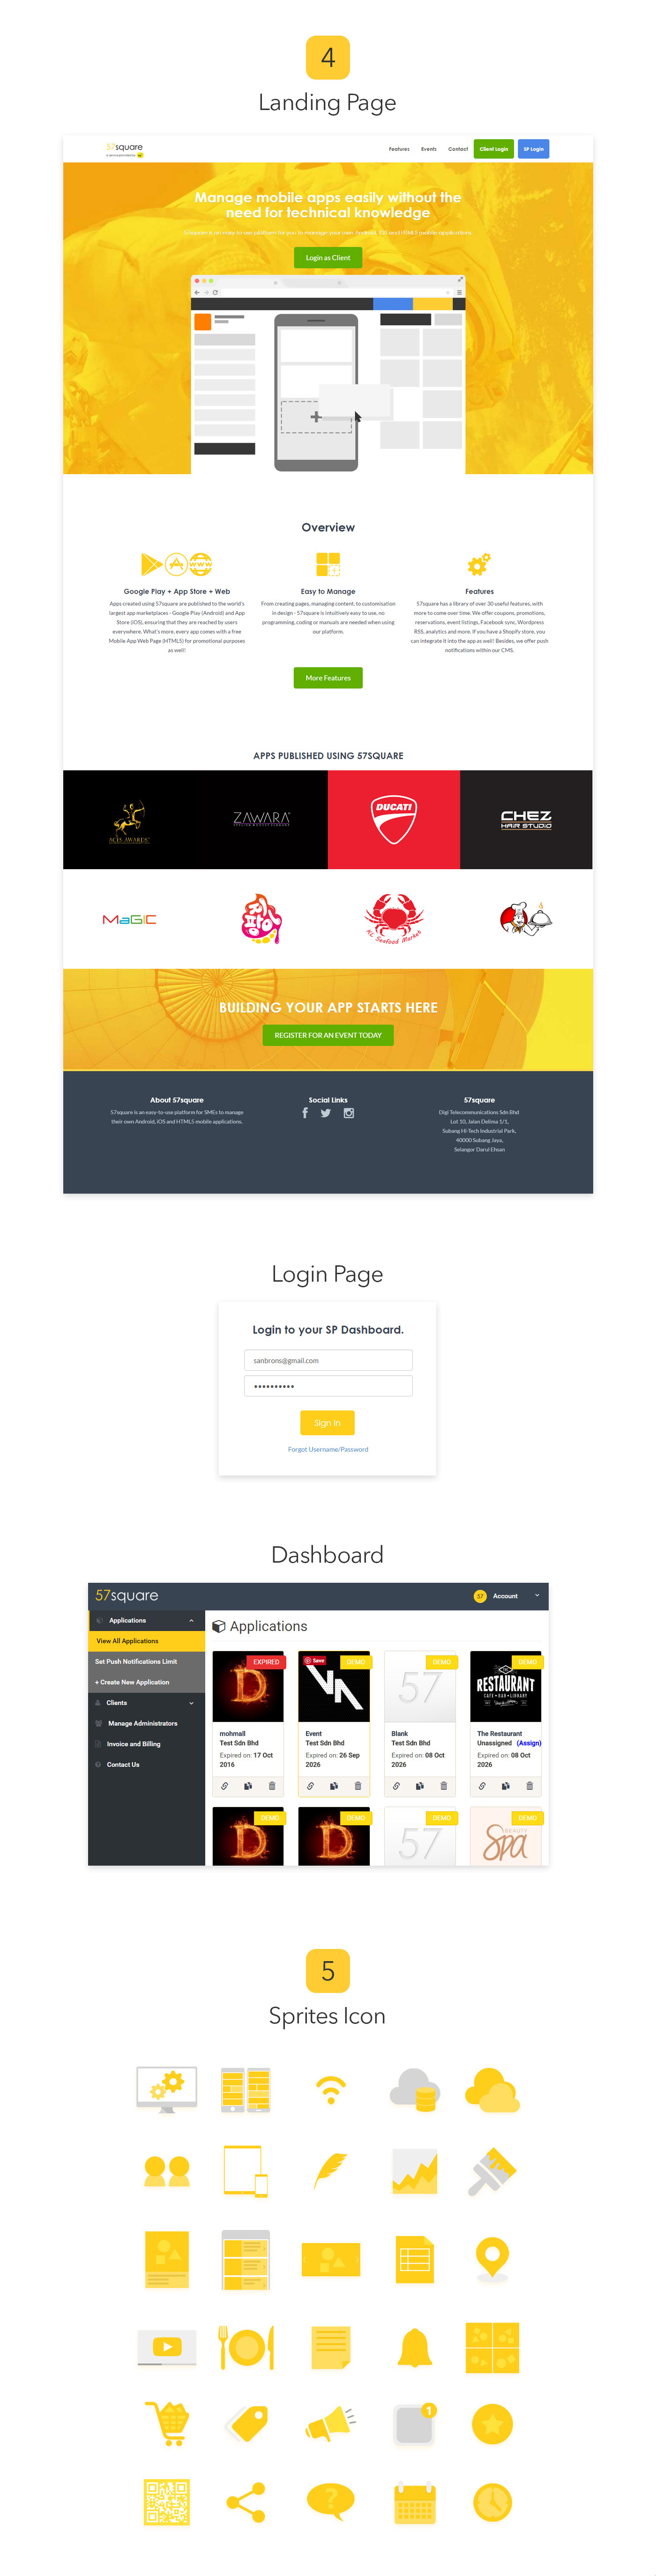 Platform Website design tools apps publish